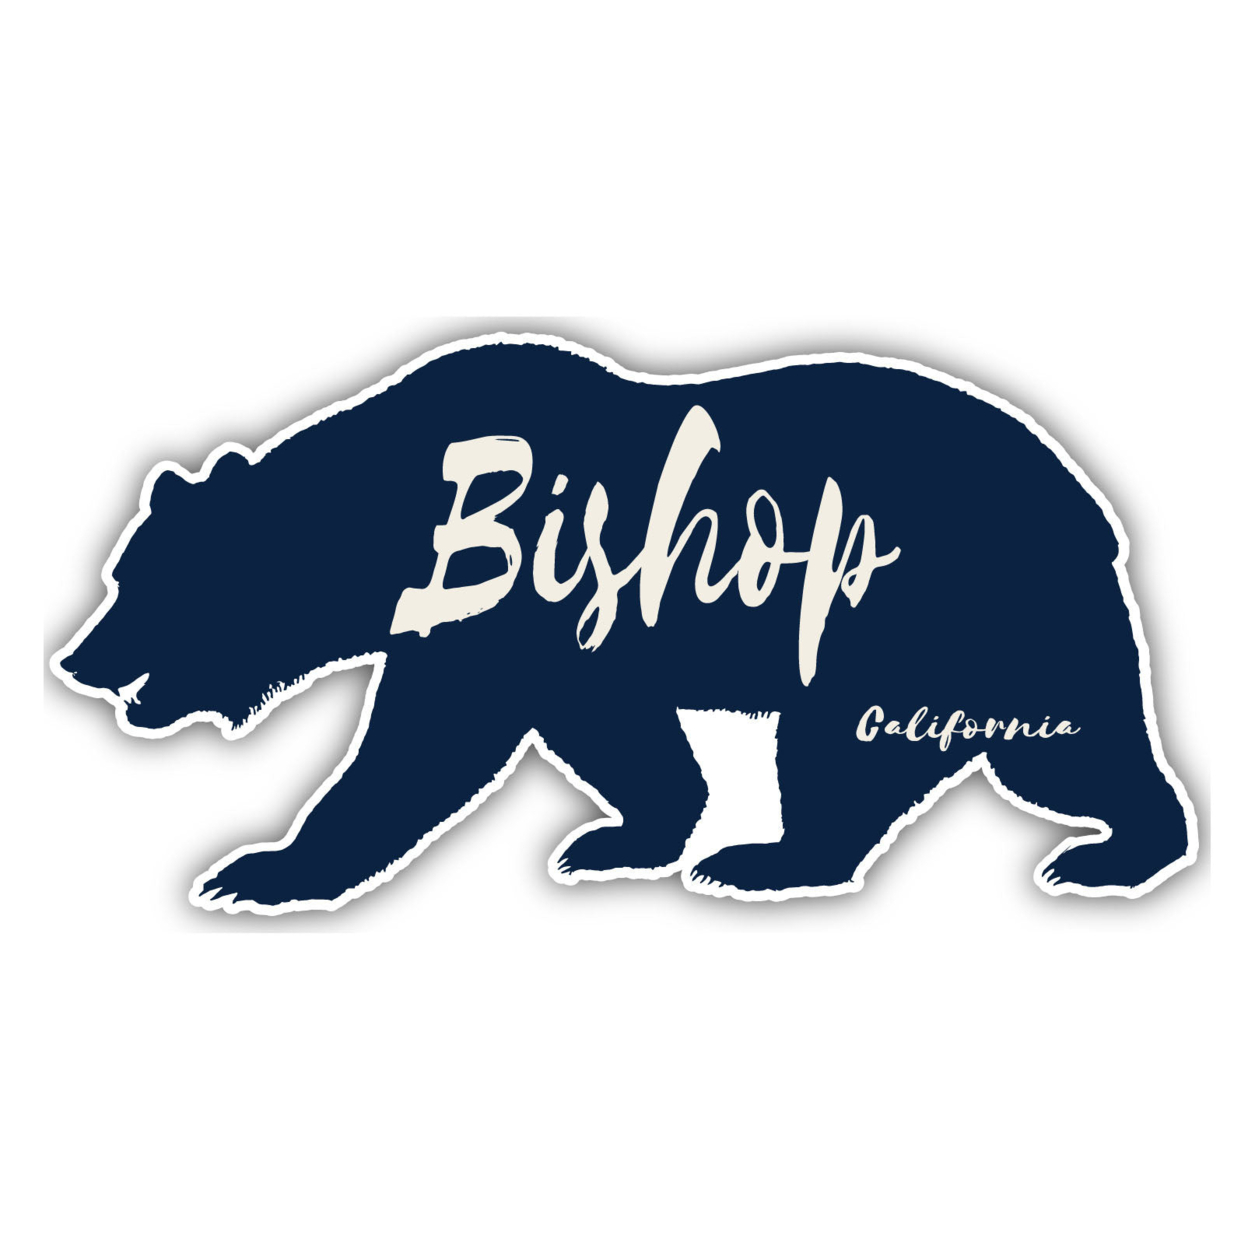 Bishop California Souvenir Decorative Stickers (Choose Theme And Size) - Single Unit, 6-Inch, Bear